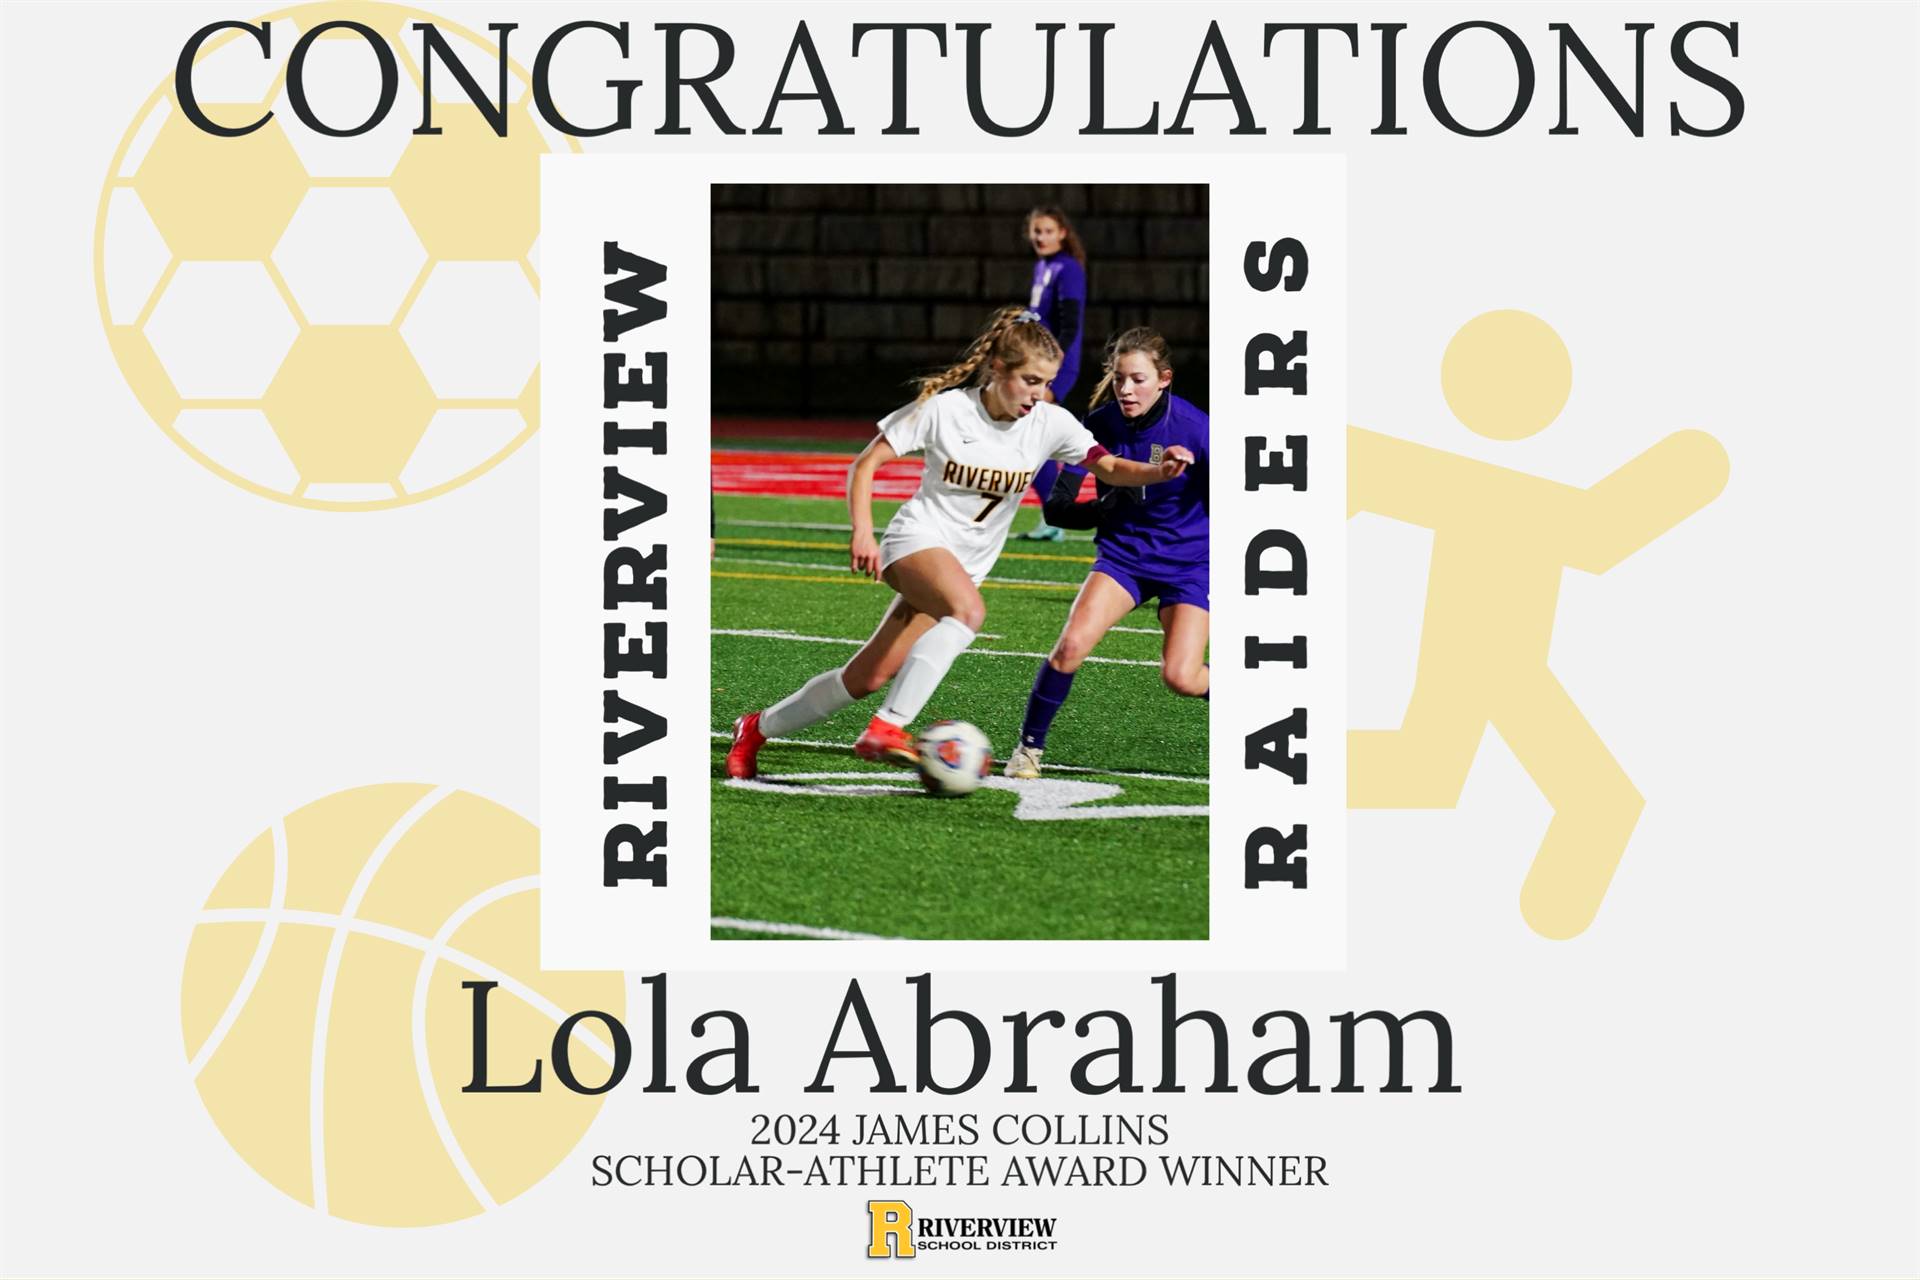 Congratulations to Lola Abraham, 2024 James Collins Scholar-Athlete Award Winner